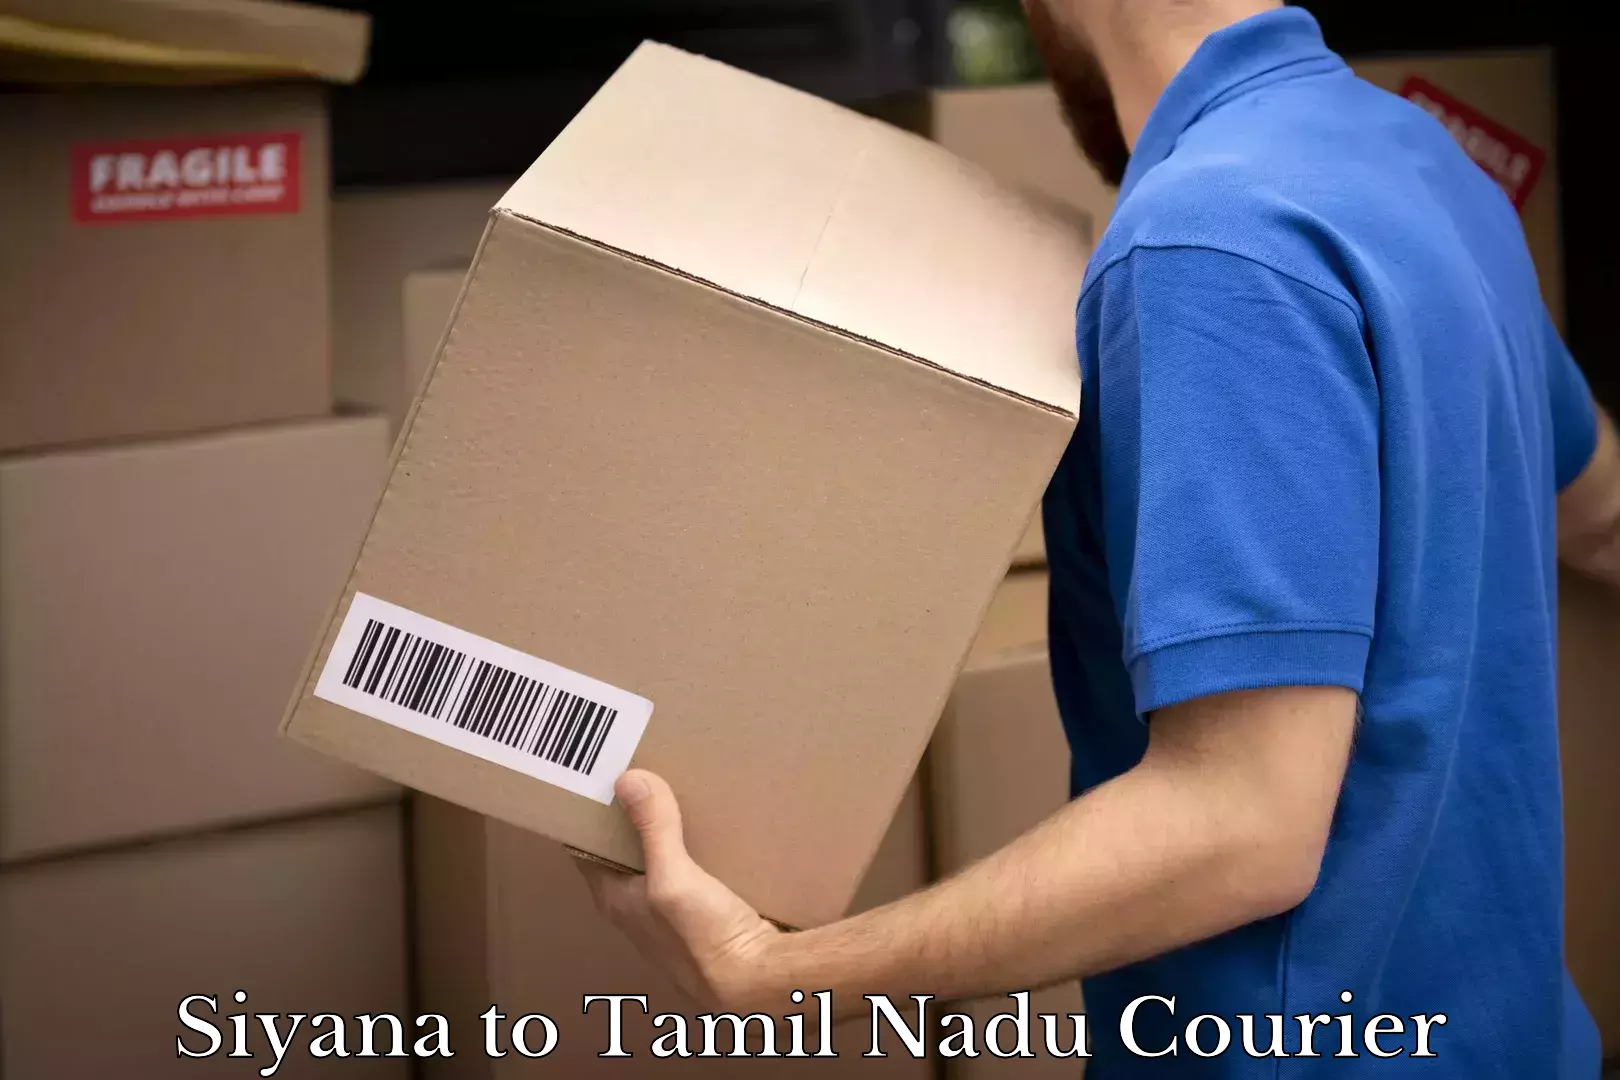 Efficient order fulfillment Siyana to Tamil Nadu